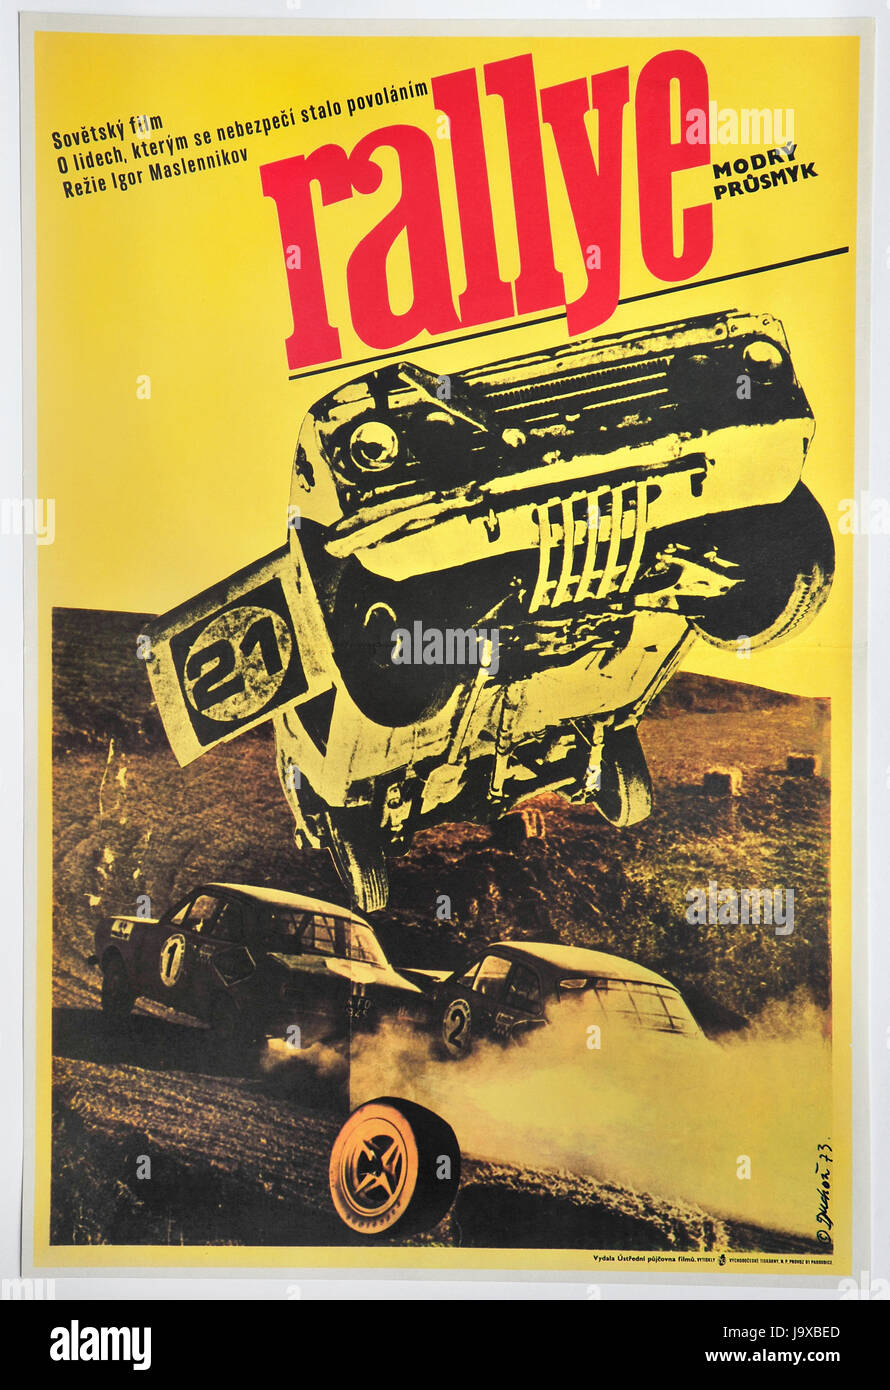 Blue Pass Rallye. Original Czechoslovak movie poster for Soviet movie. Stock Photo